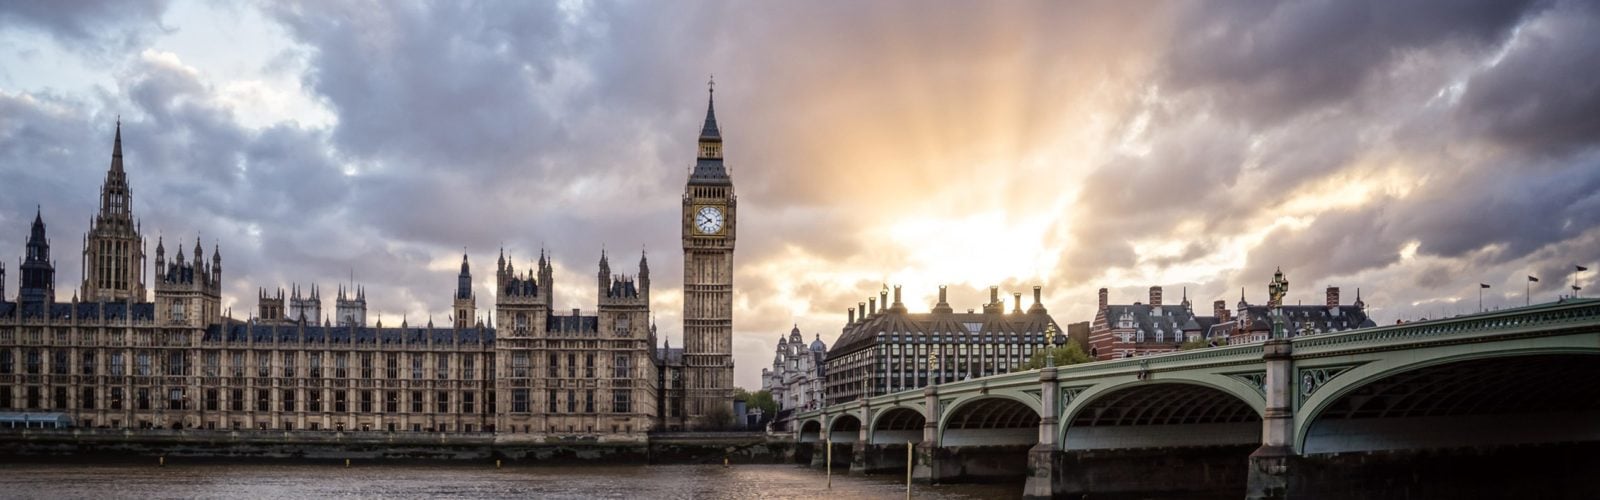 london-parliament-sunset